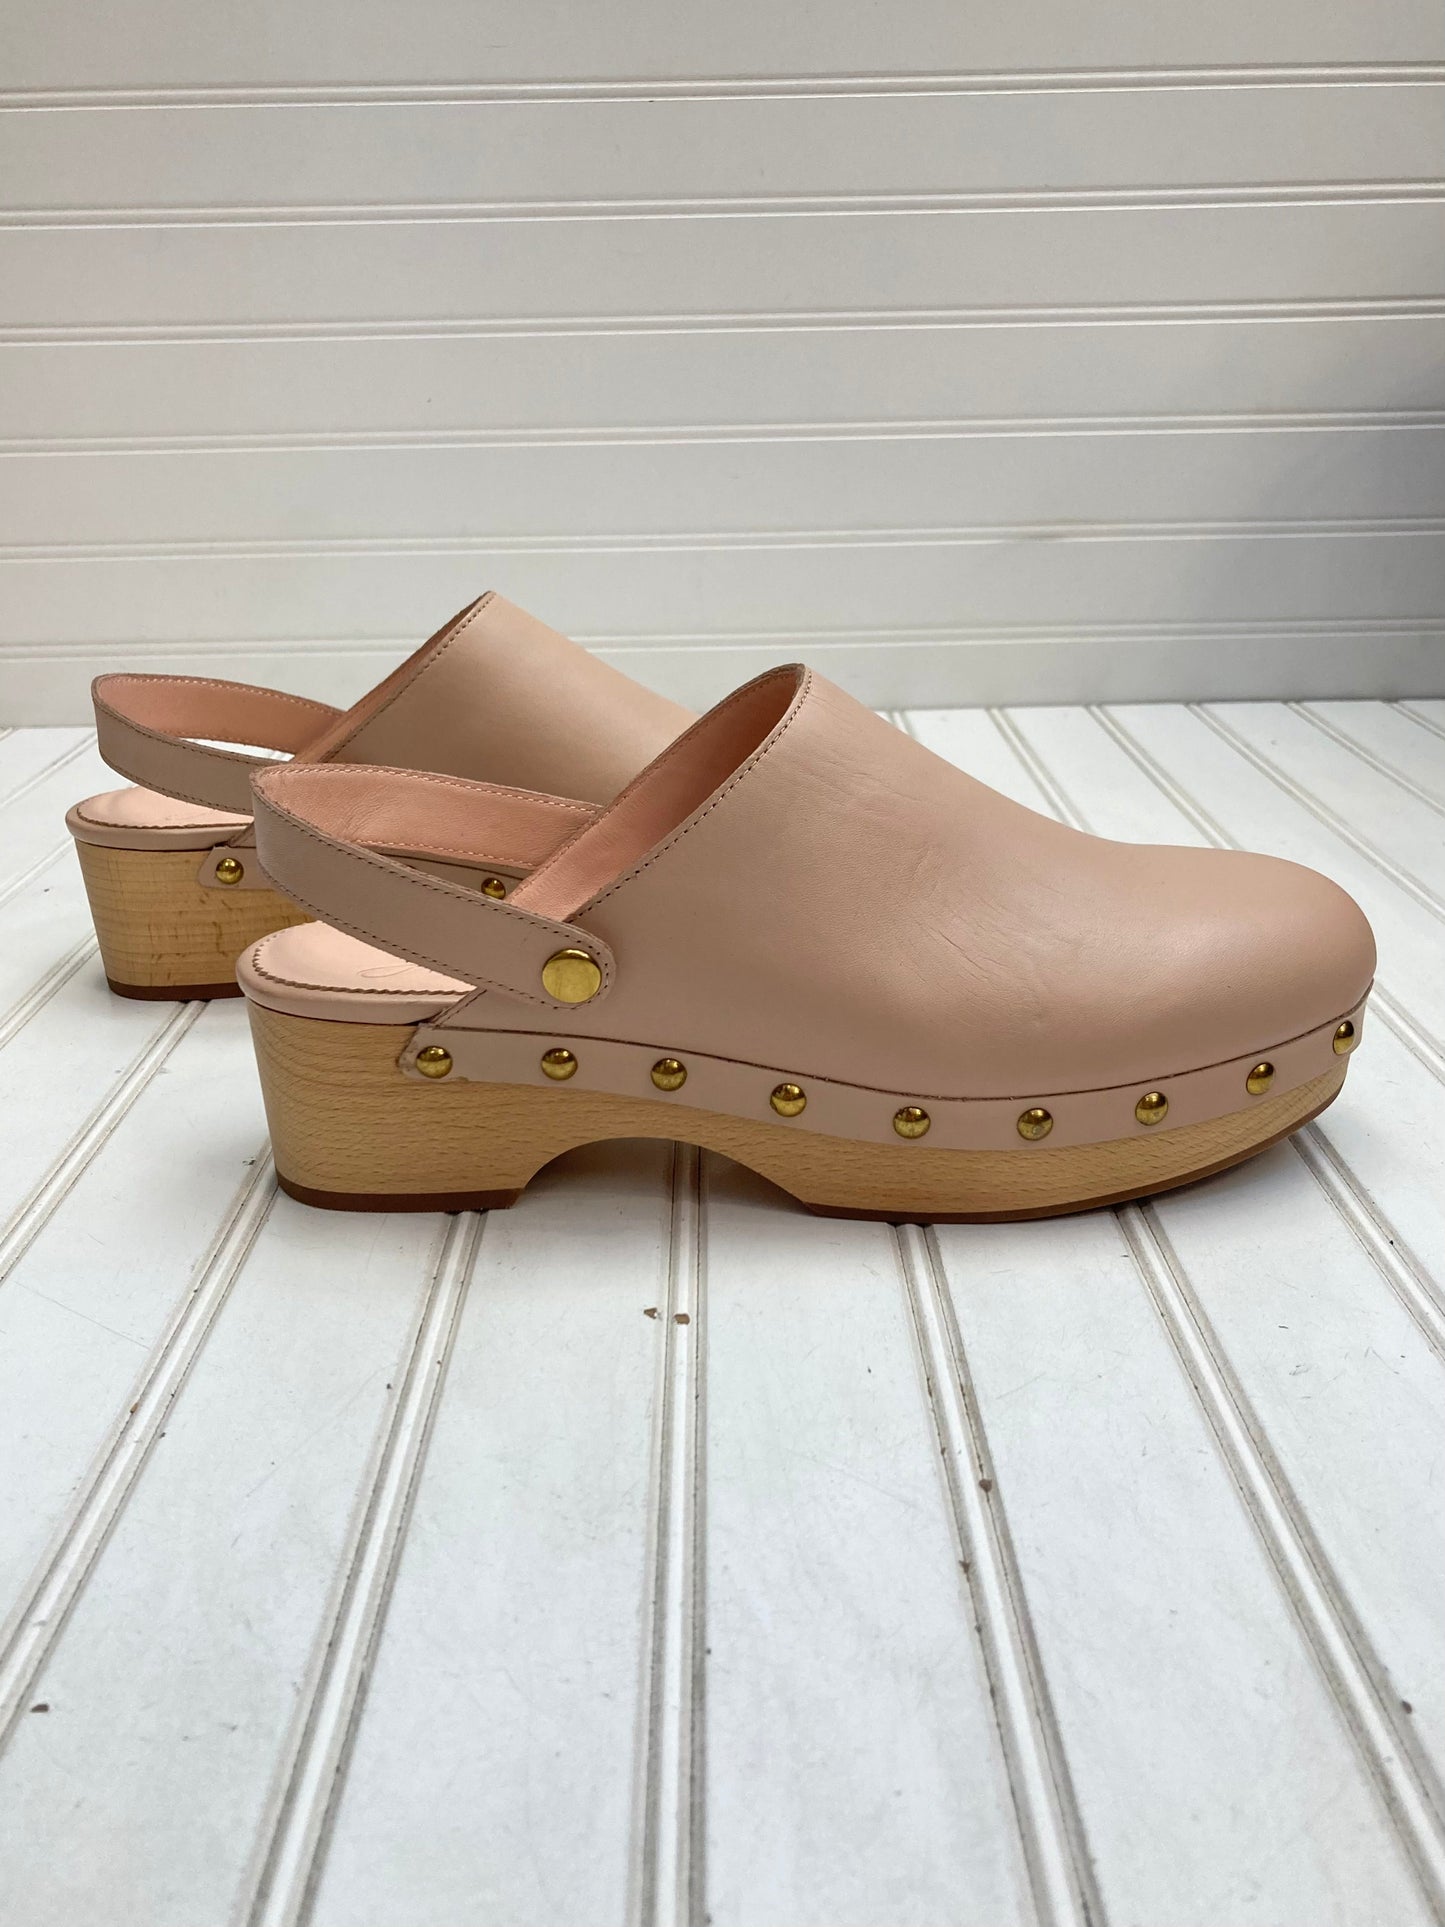 Pink Shoes Heels Platform J. Crew, Size 9